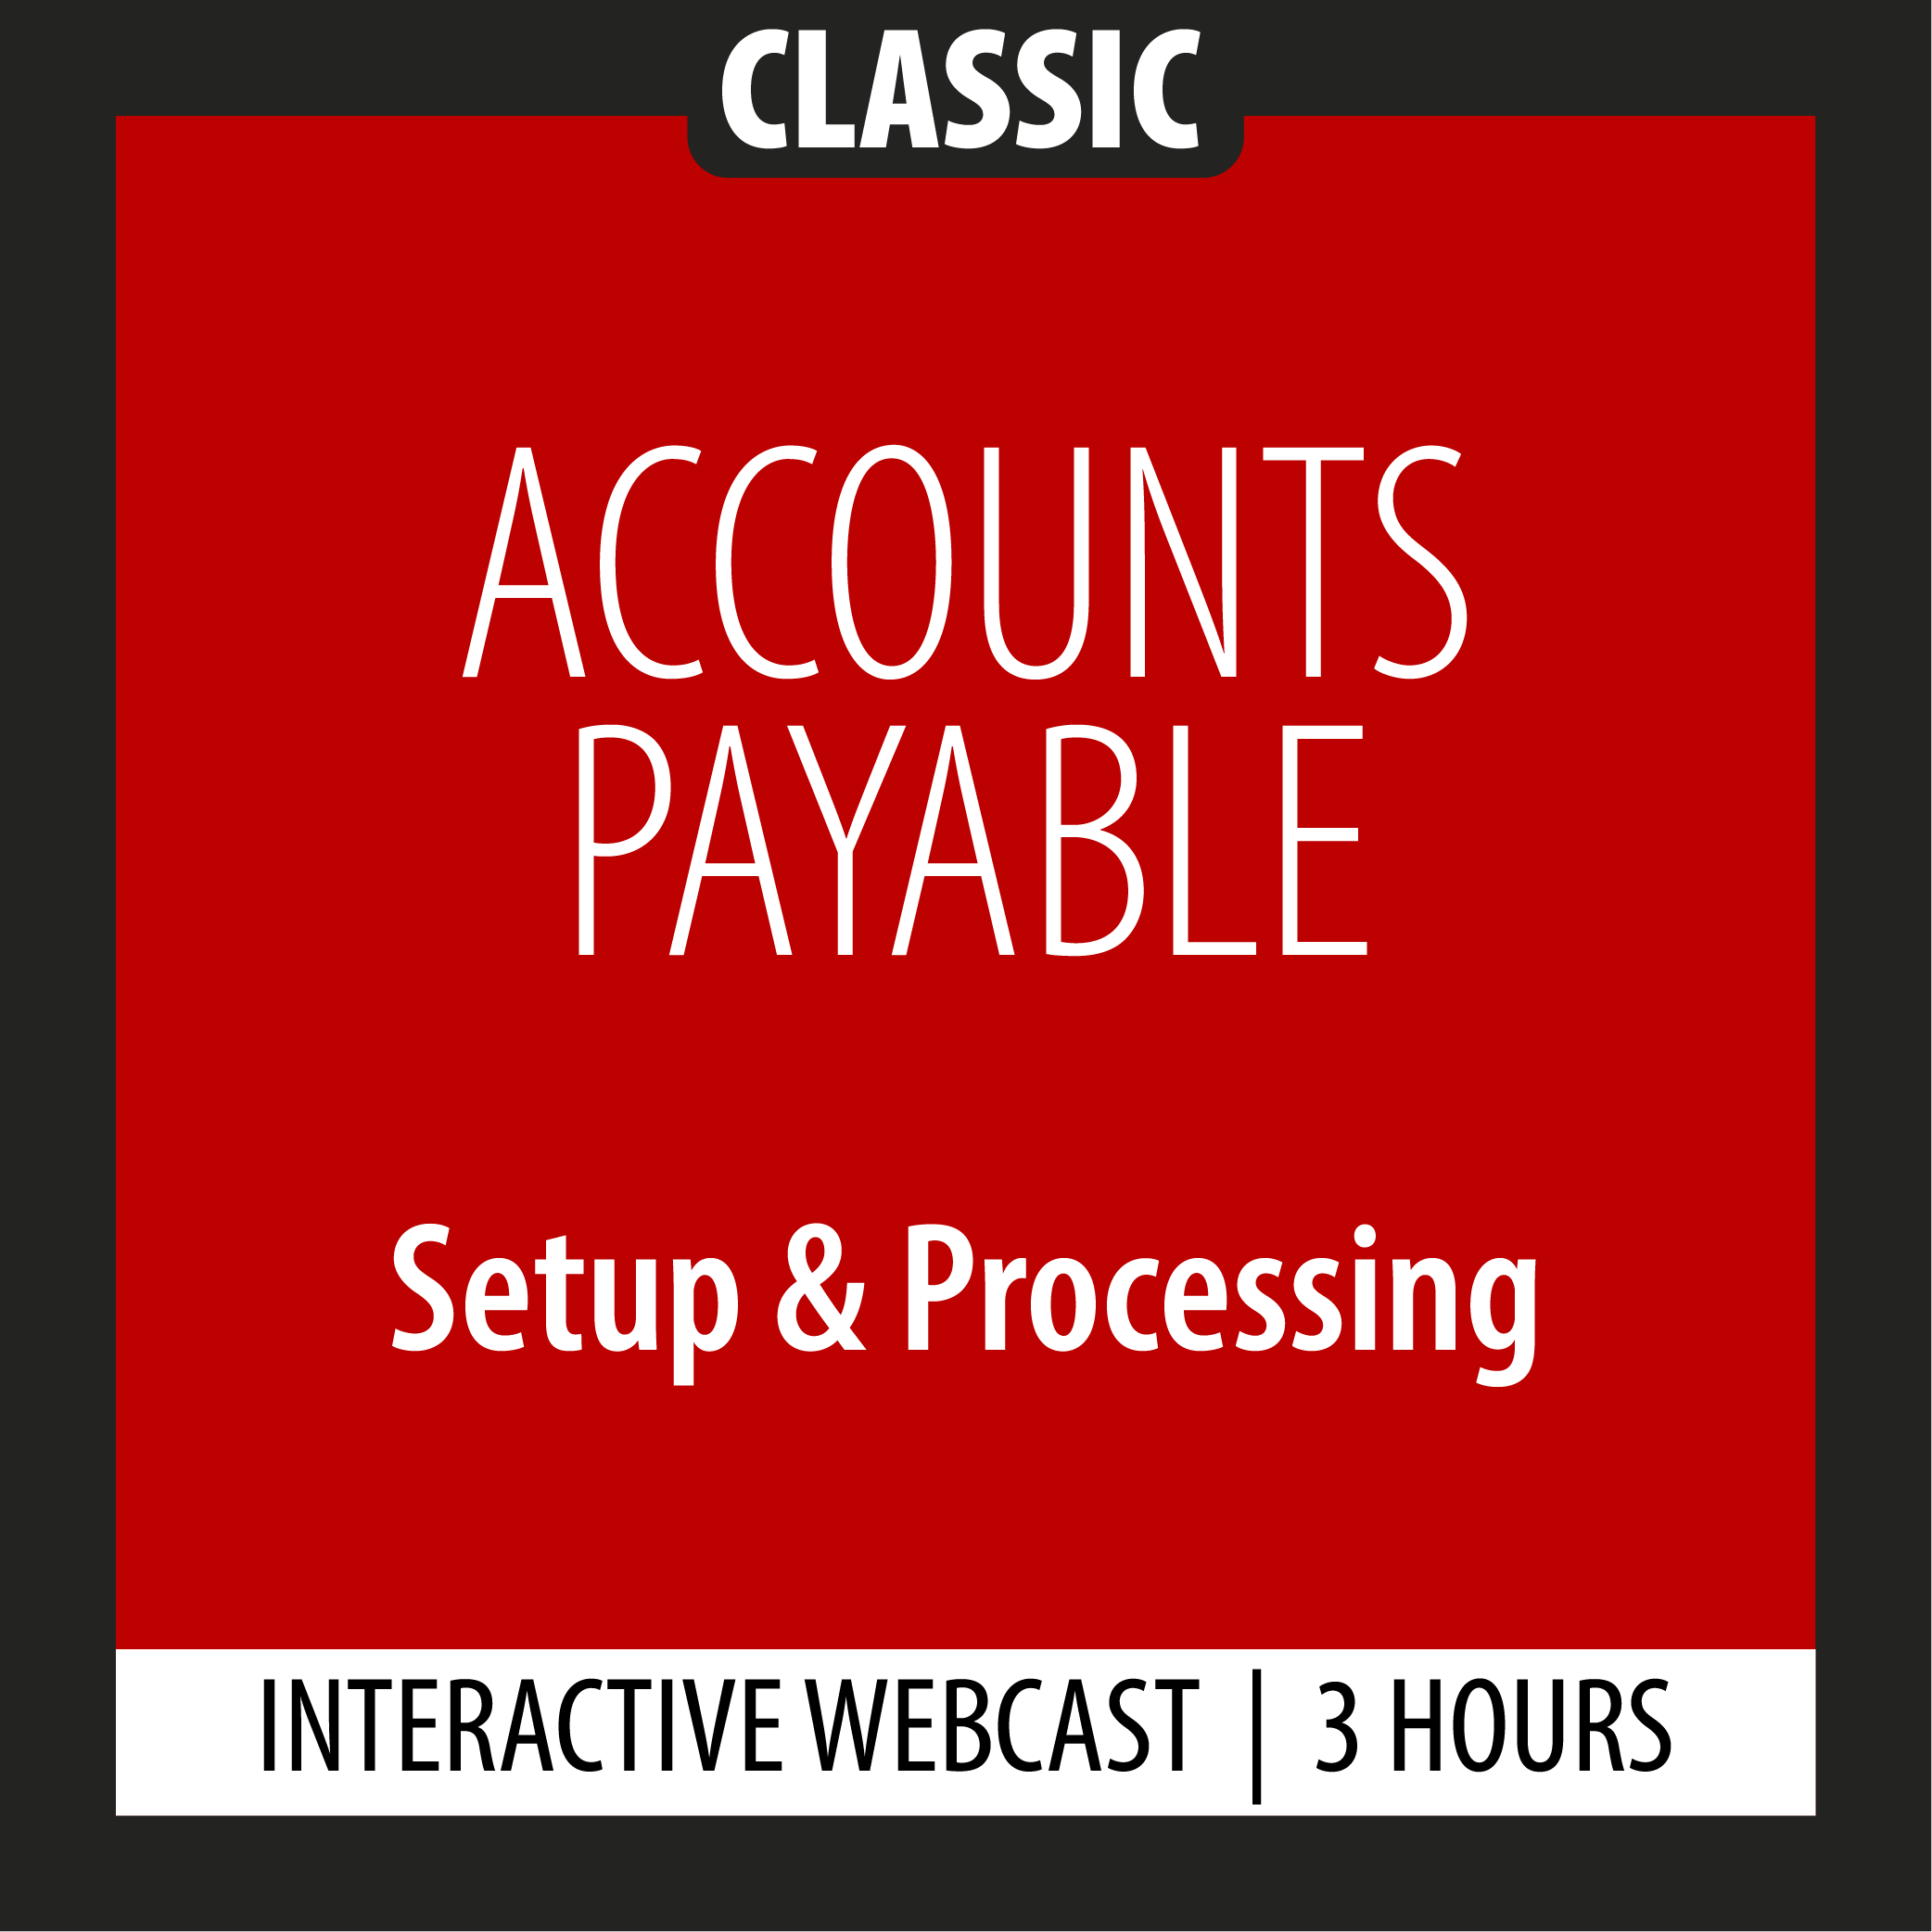 Classic - Accounts Payable - Setup & Processing - Webcast - 3 Hours